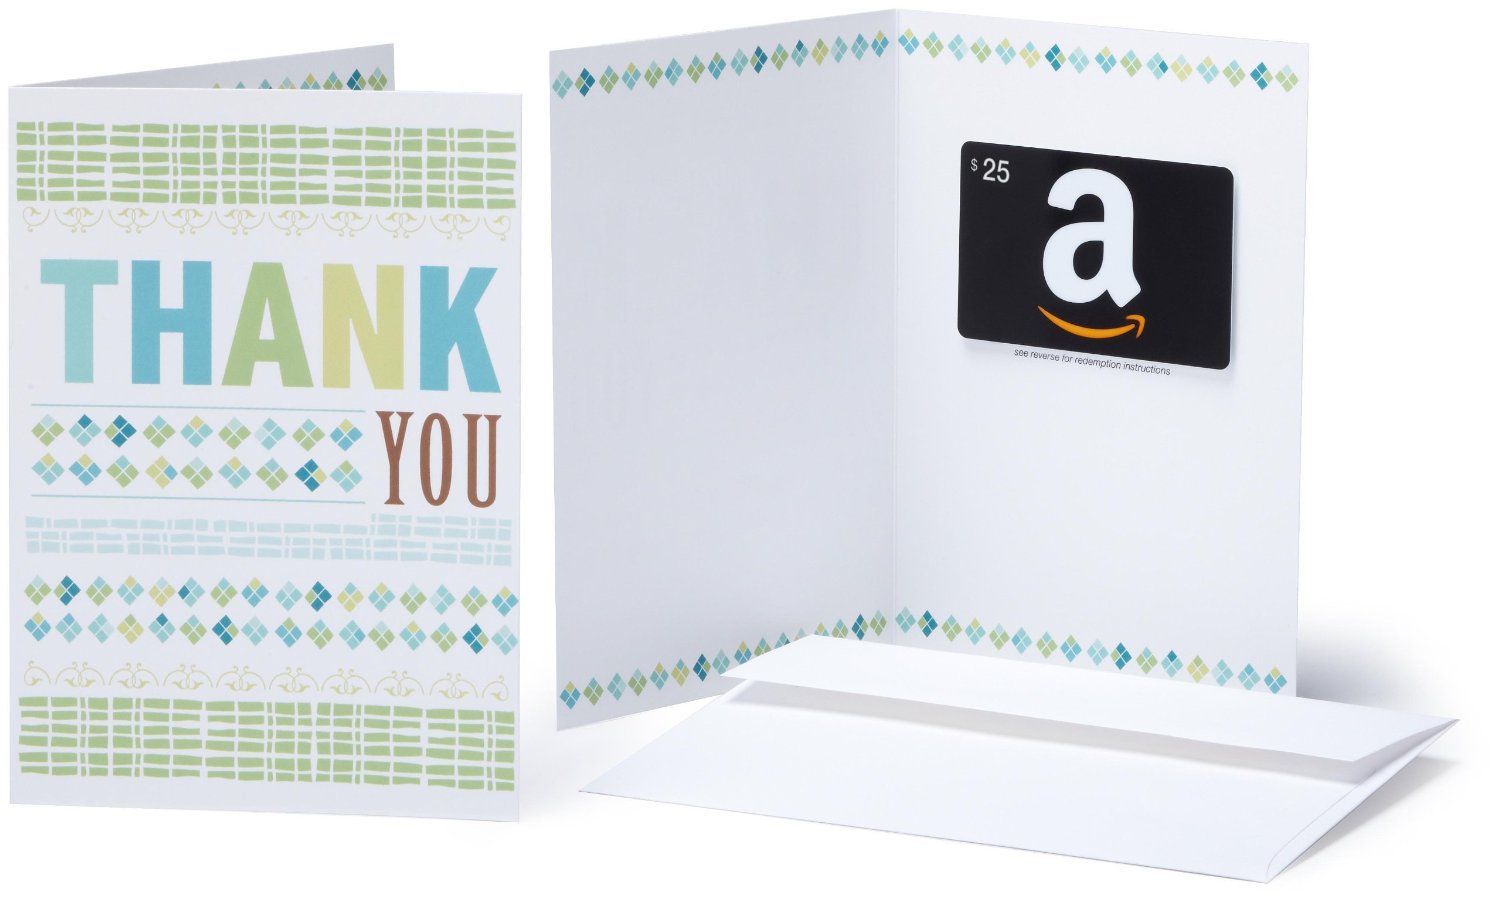 Winner Announced – $25 Amazon Gift Card